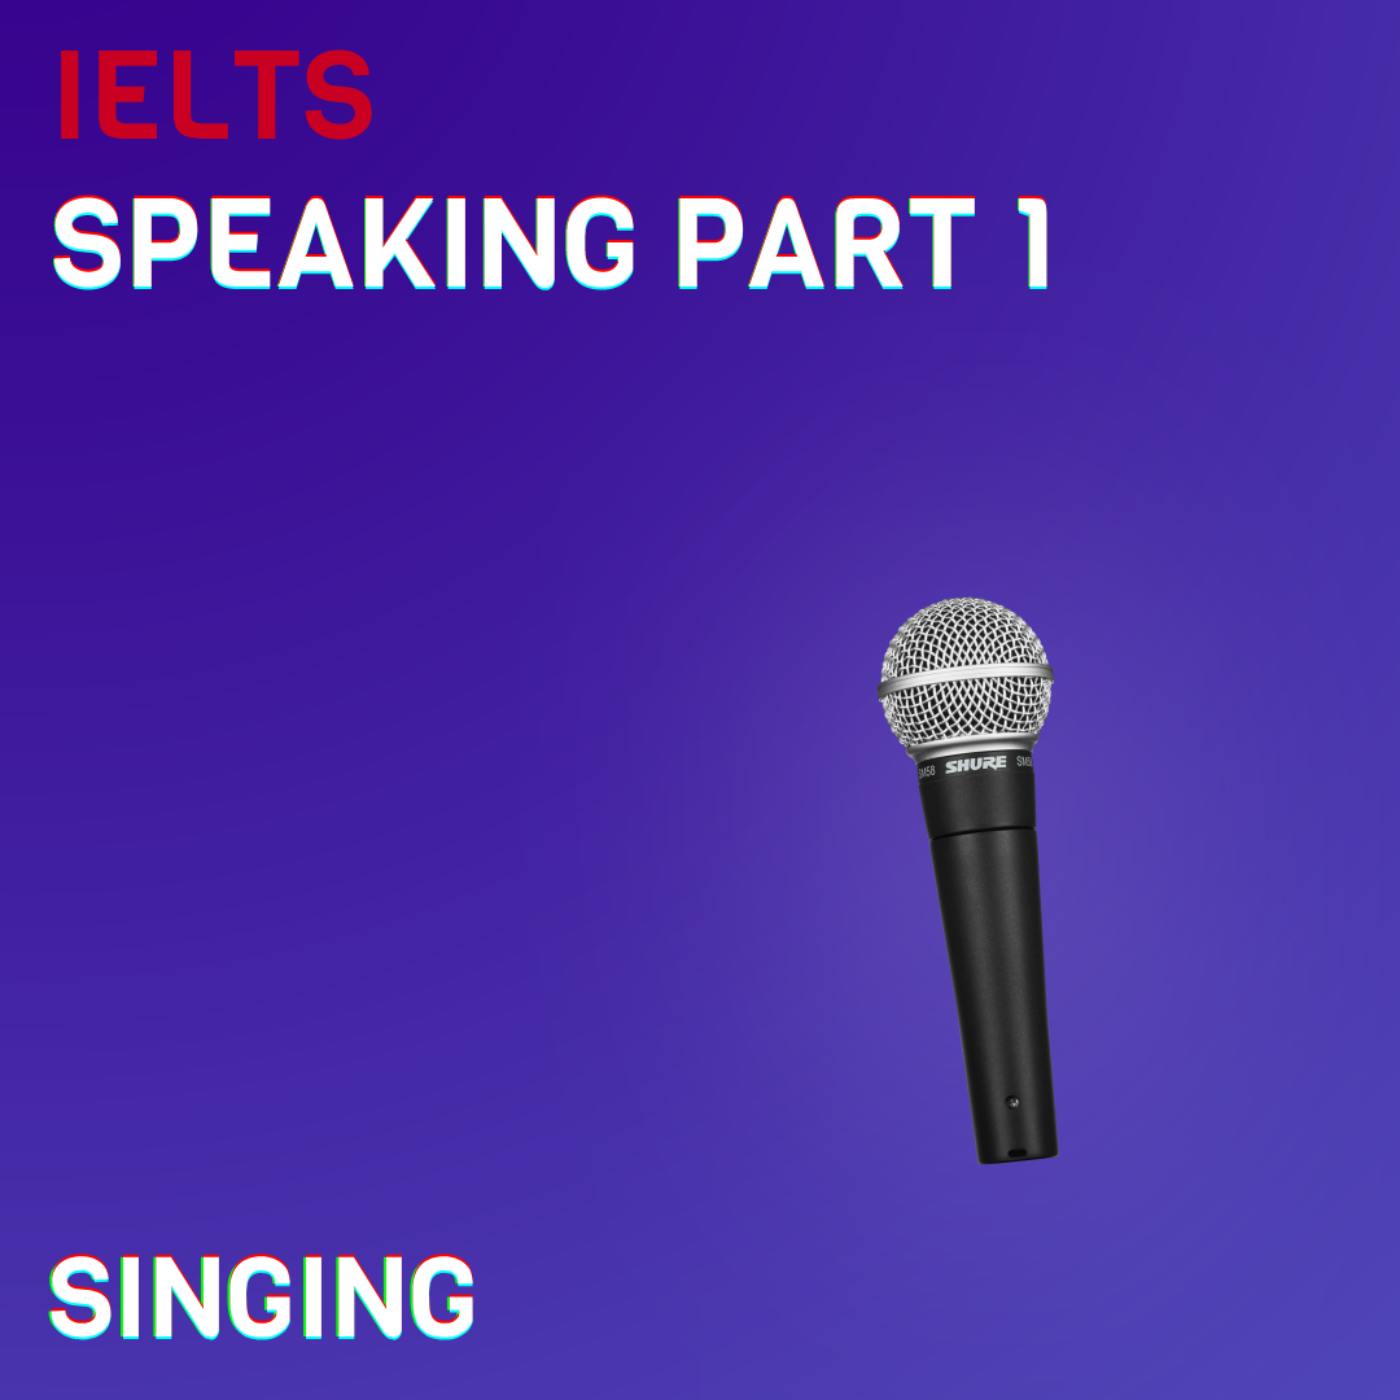 🎤 Singing (S10E04) + Transcript